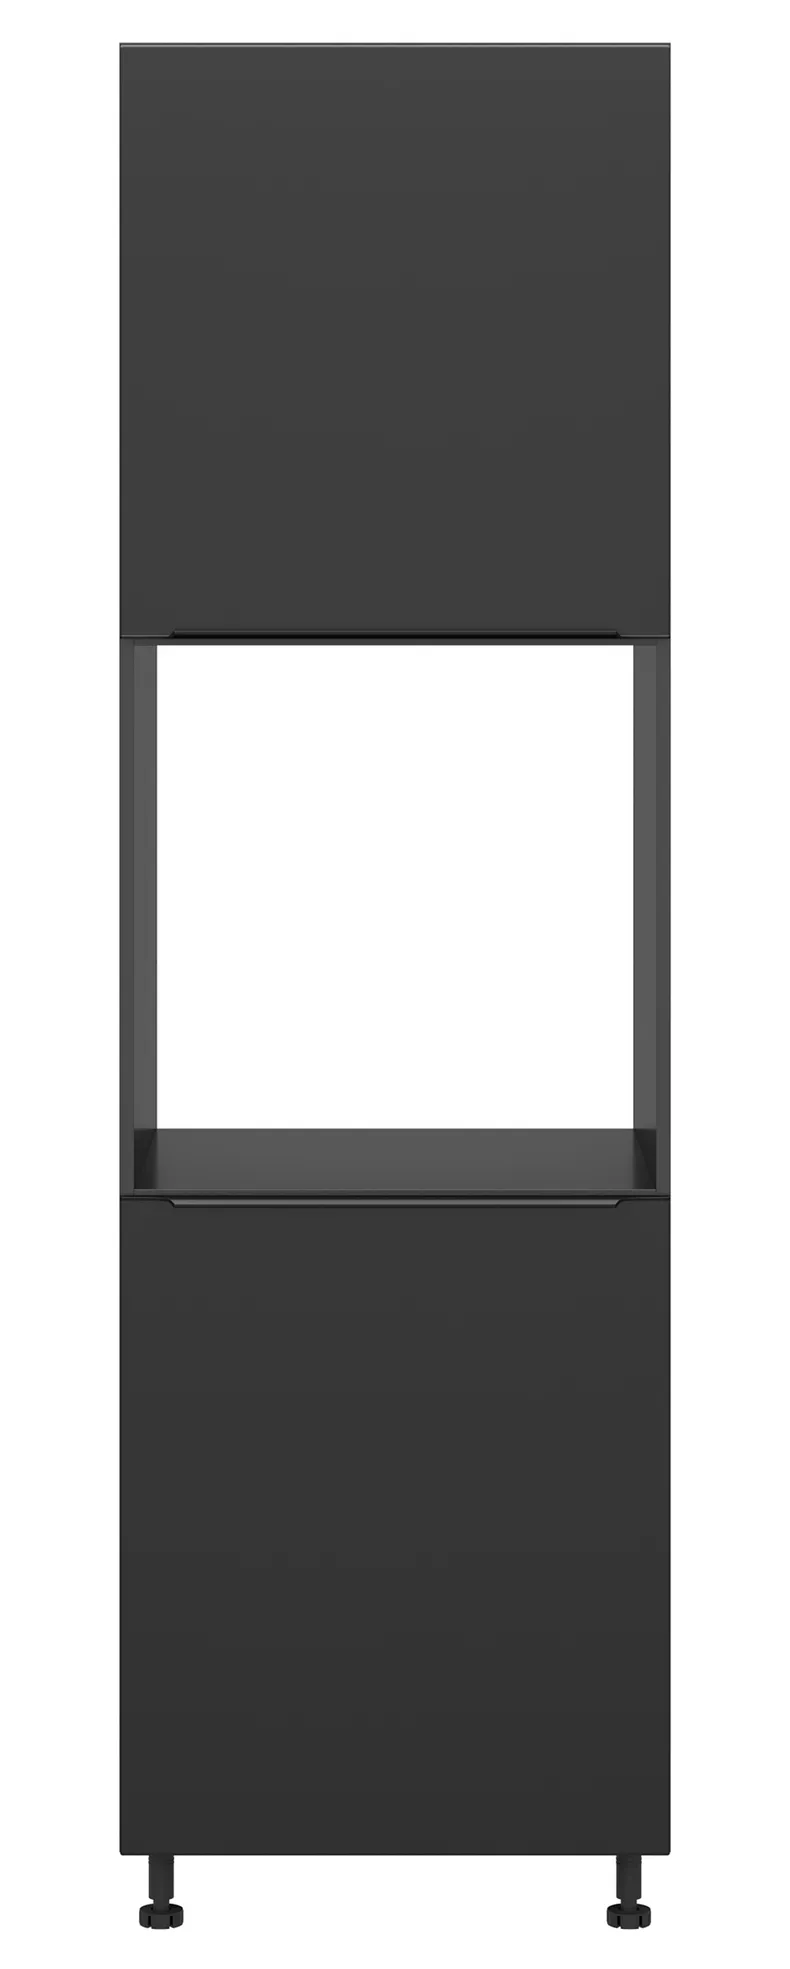 BRW Кухонный шкаф Sole L6 60 см левосторонний матовый черный, черный/черный матовый FM_DPS_60/207_L/L-CA/CAM фото №1